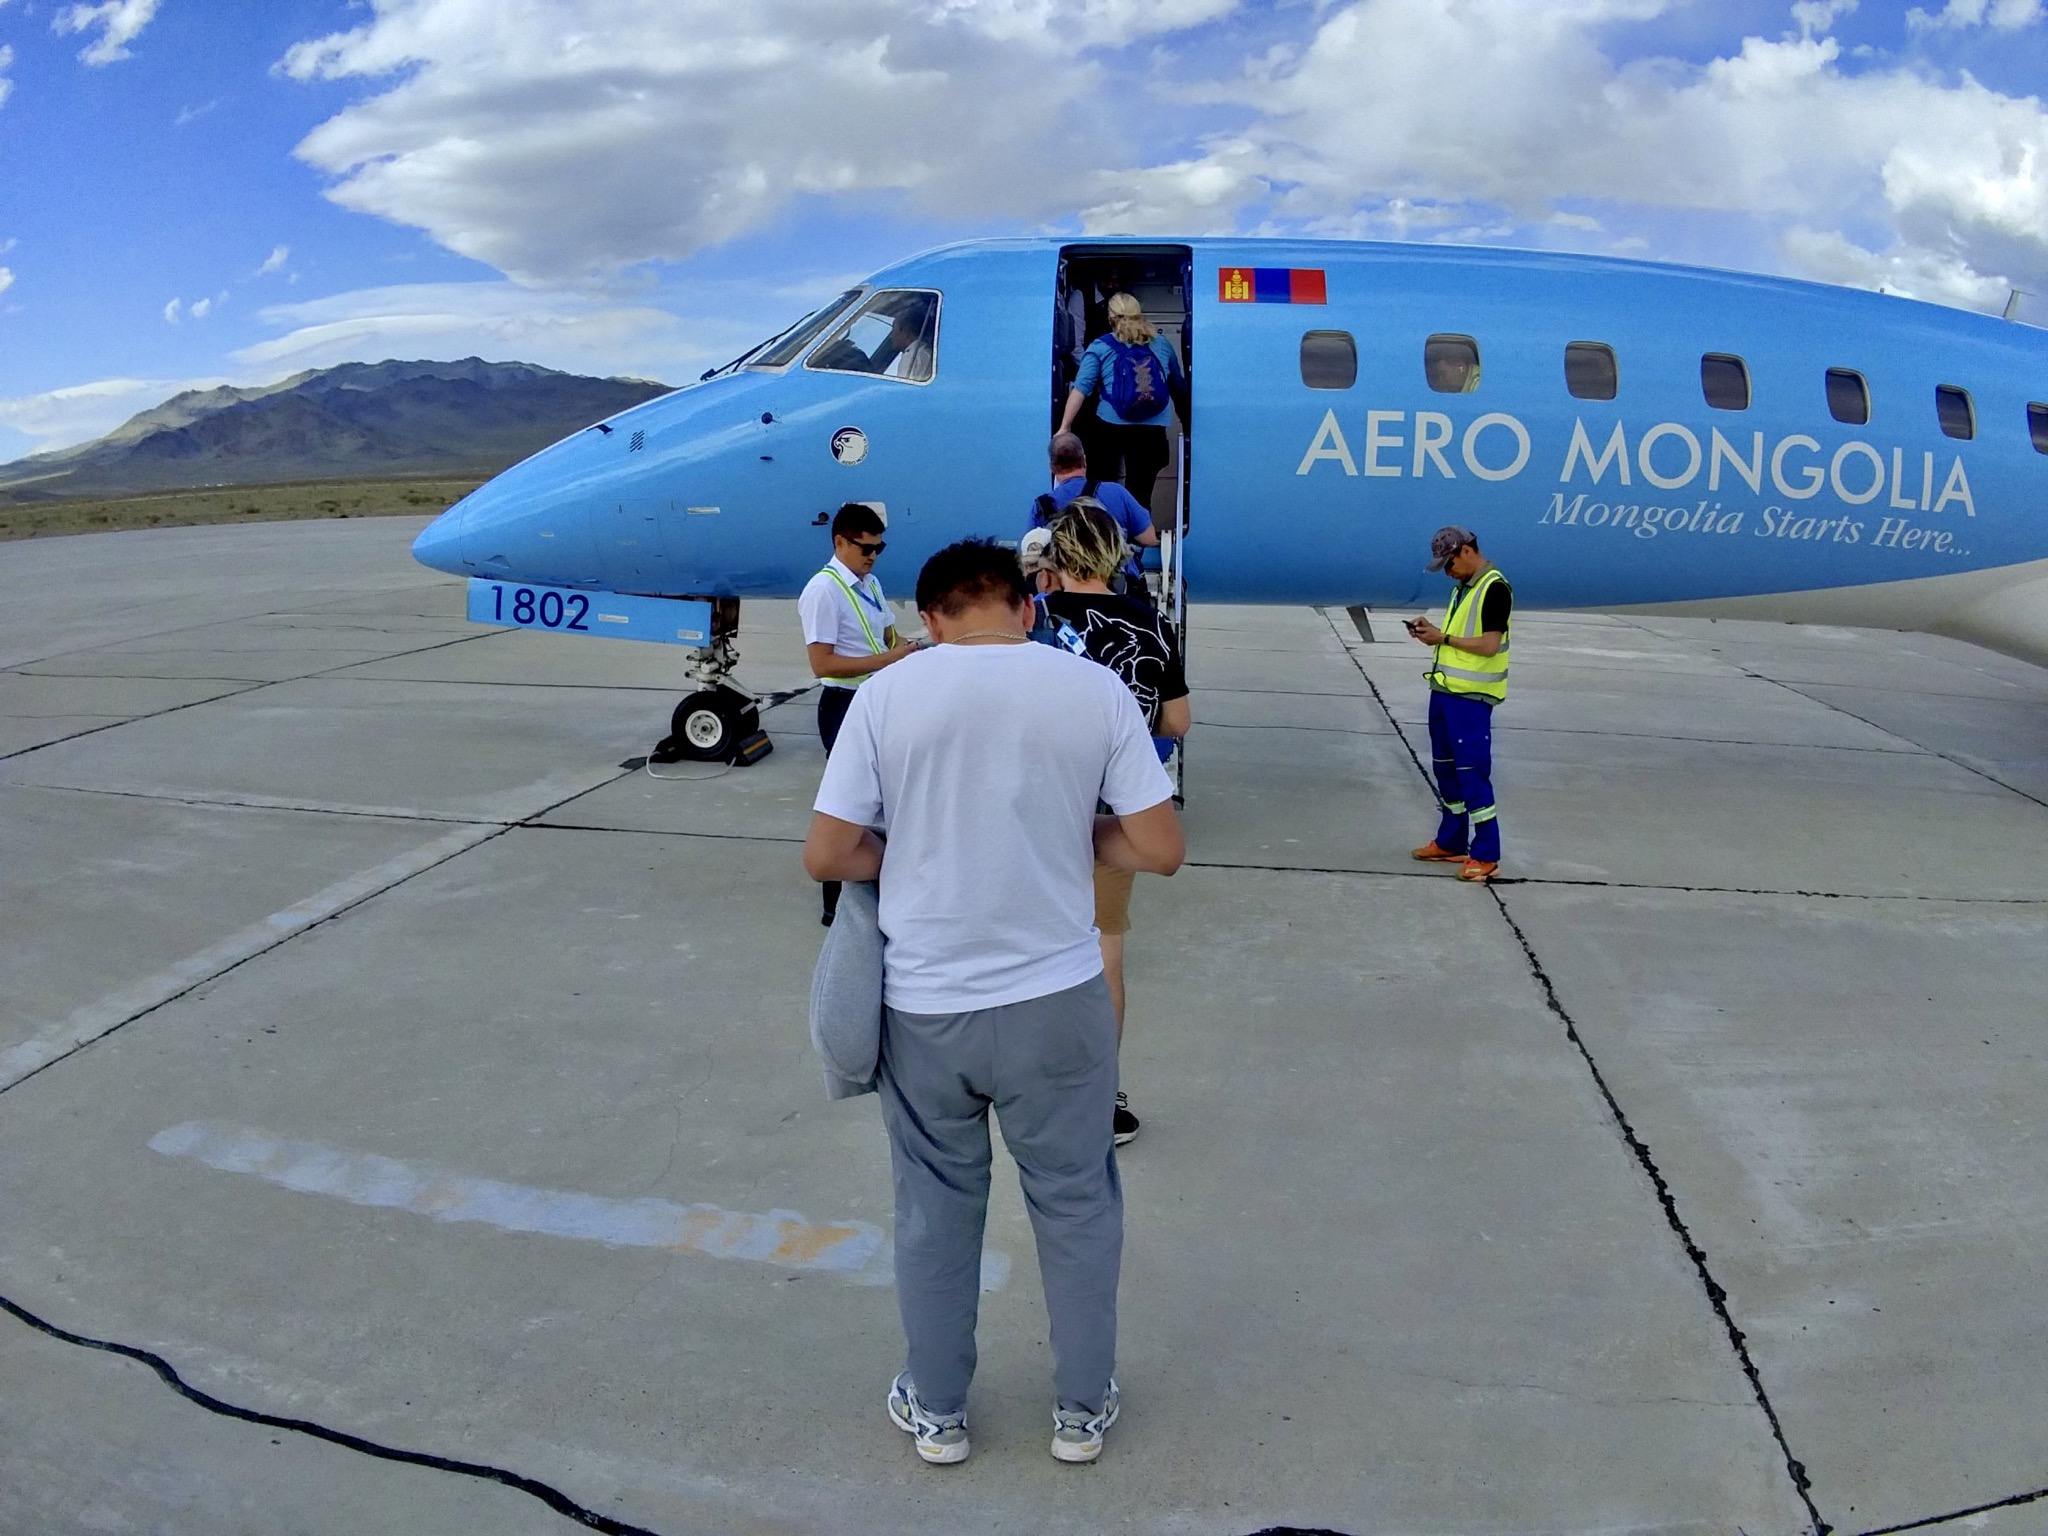 A small, light blue Aero Mongolia plane on the runway